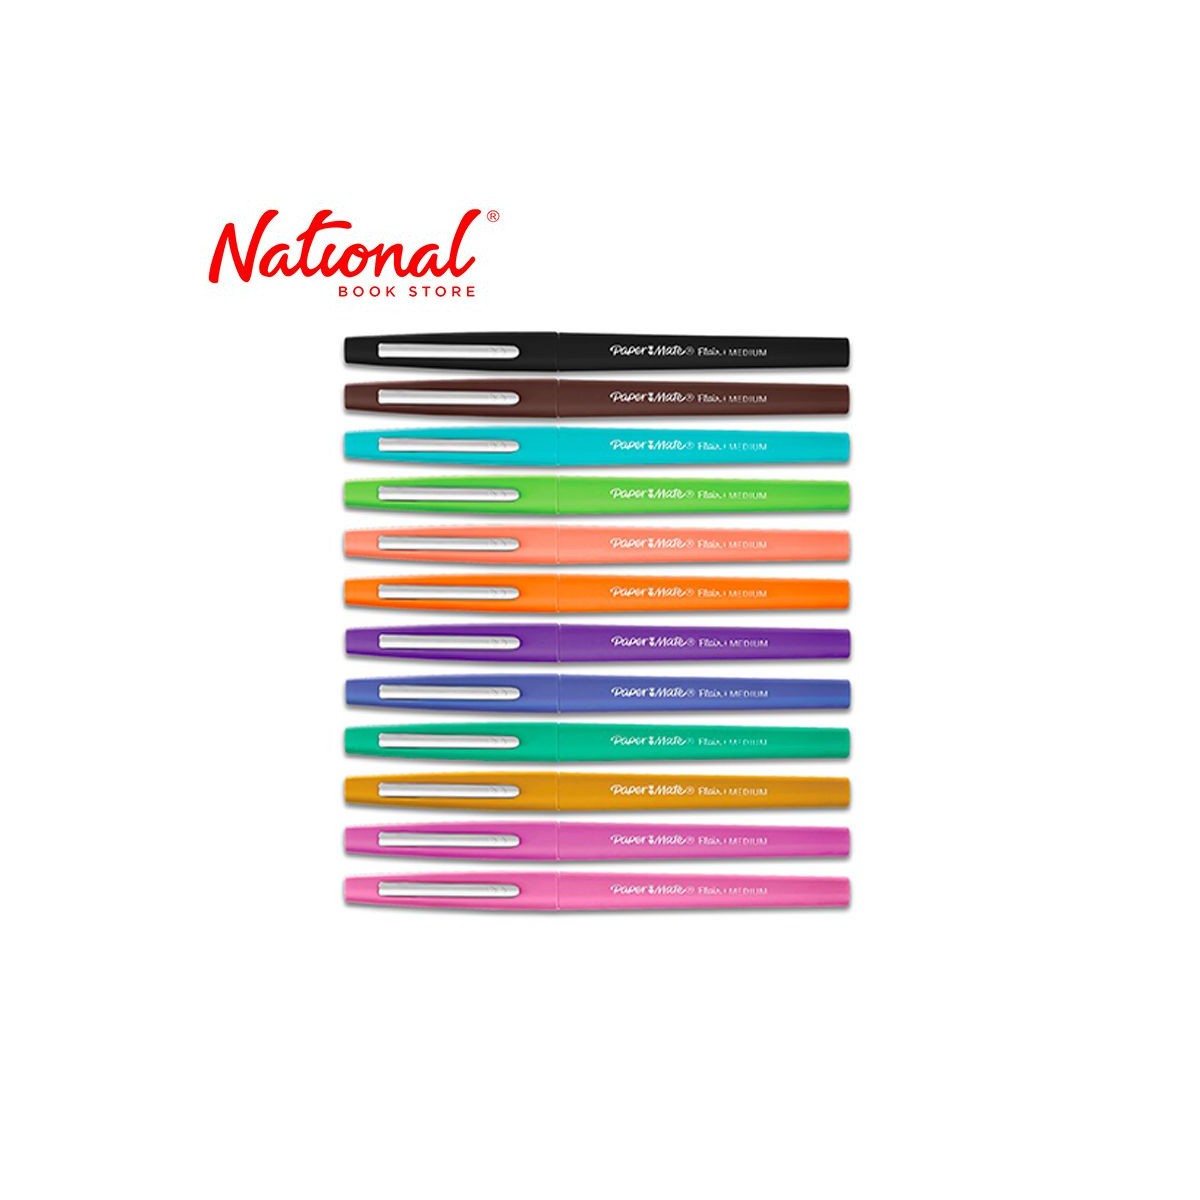 Papermate Flair Felt Tip Pens Candy Pop Assorted Medium Point 12s 04016408 - School Office Supplies